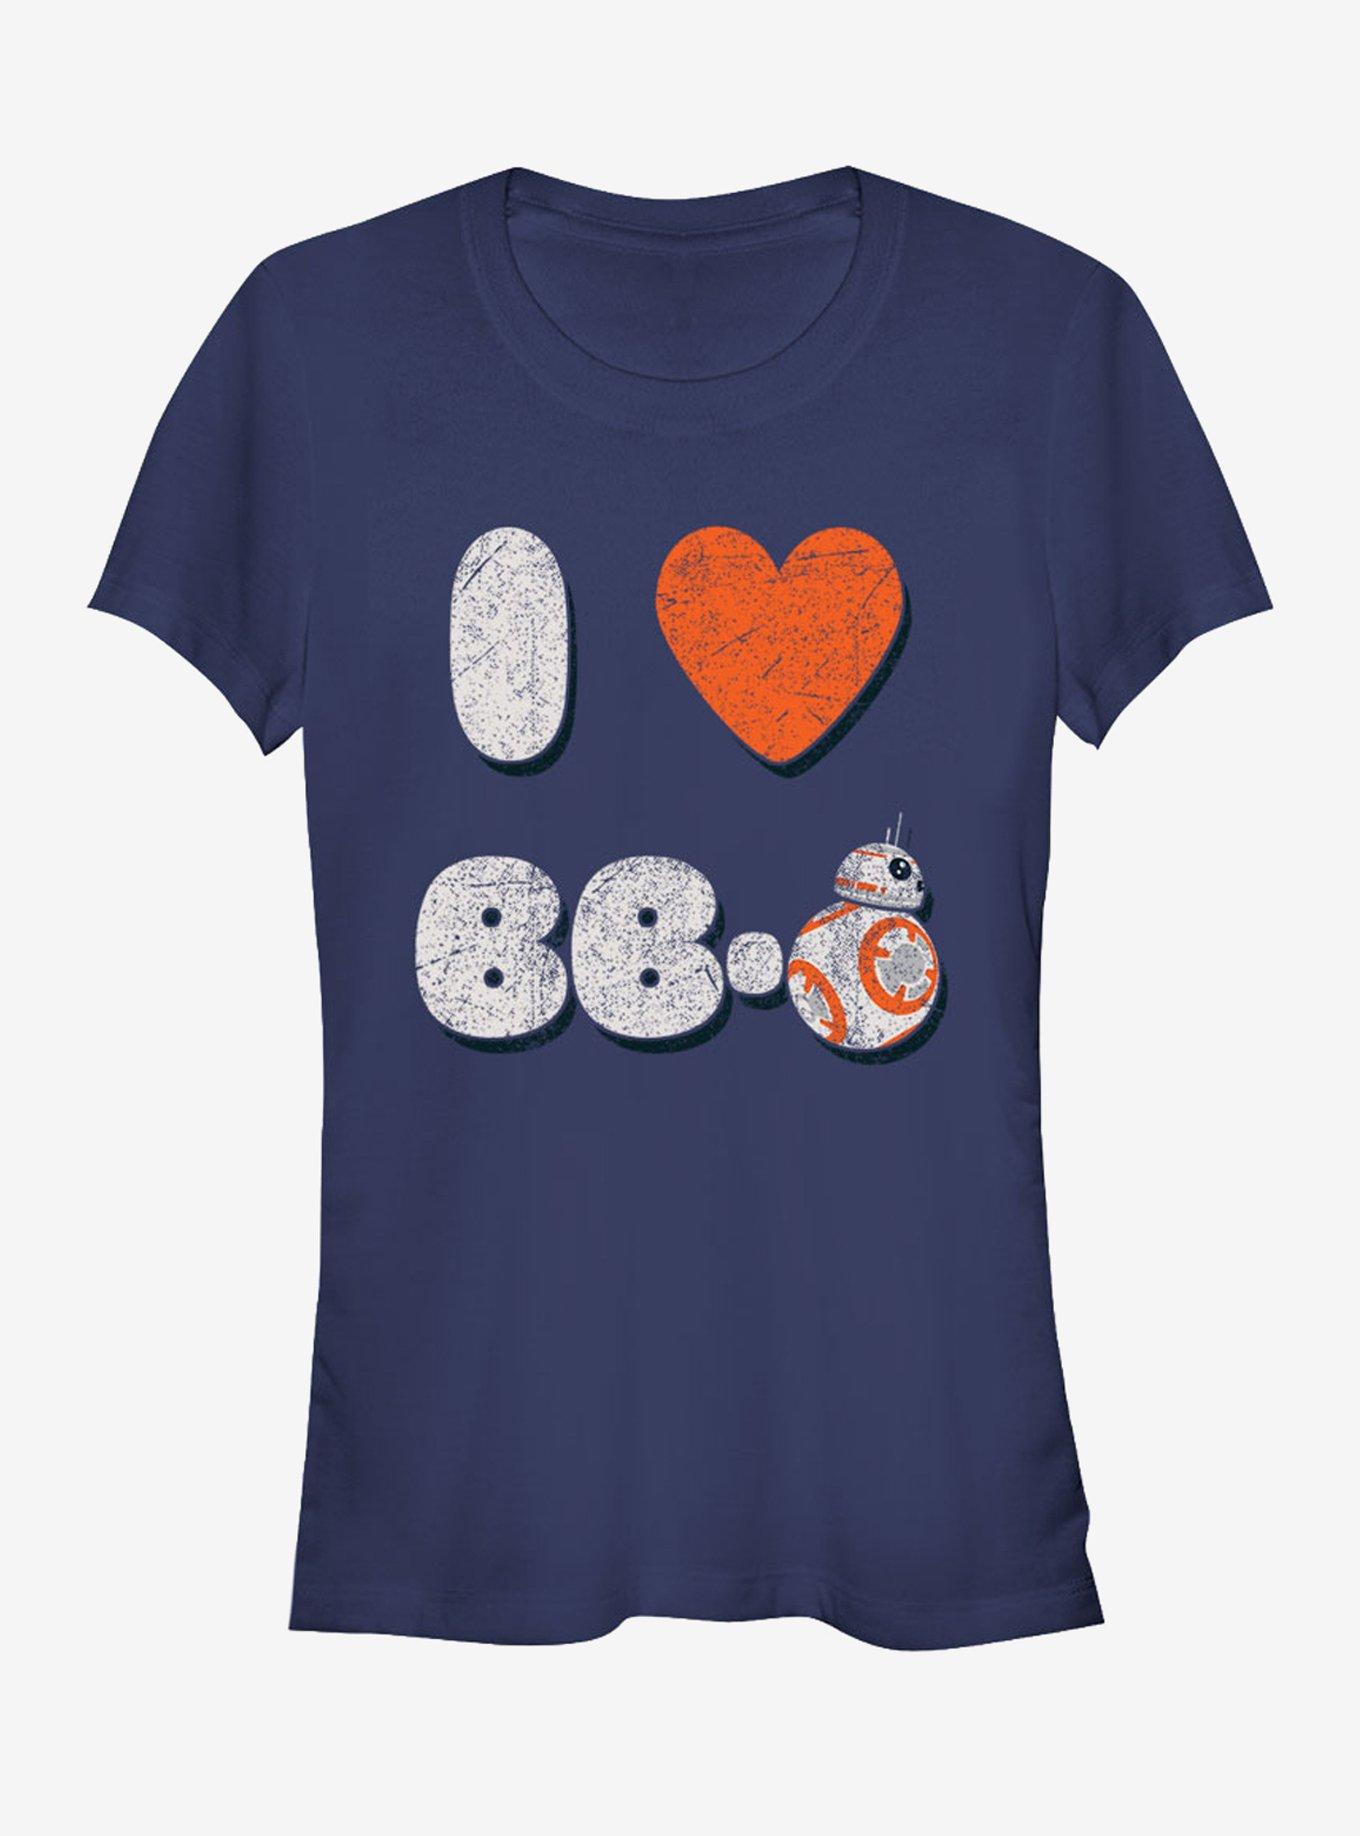 Star Wars I Love BB-8 Girls T-Shirt